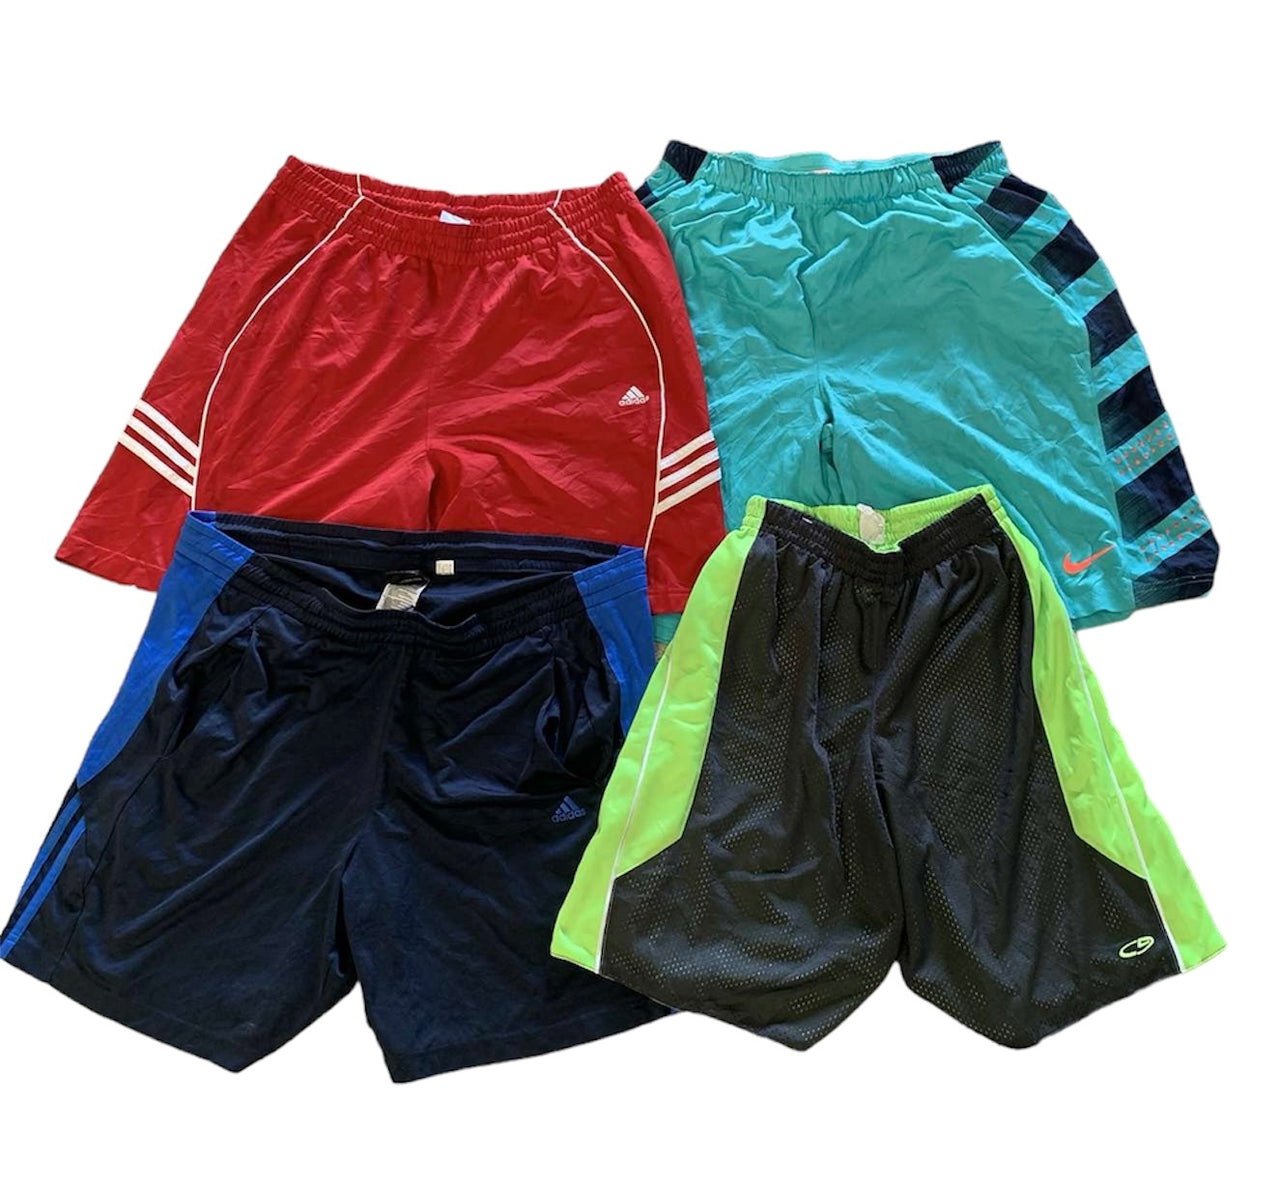 Sport Shorts Wholesale